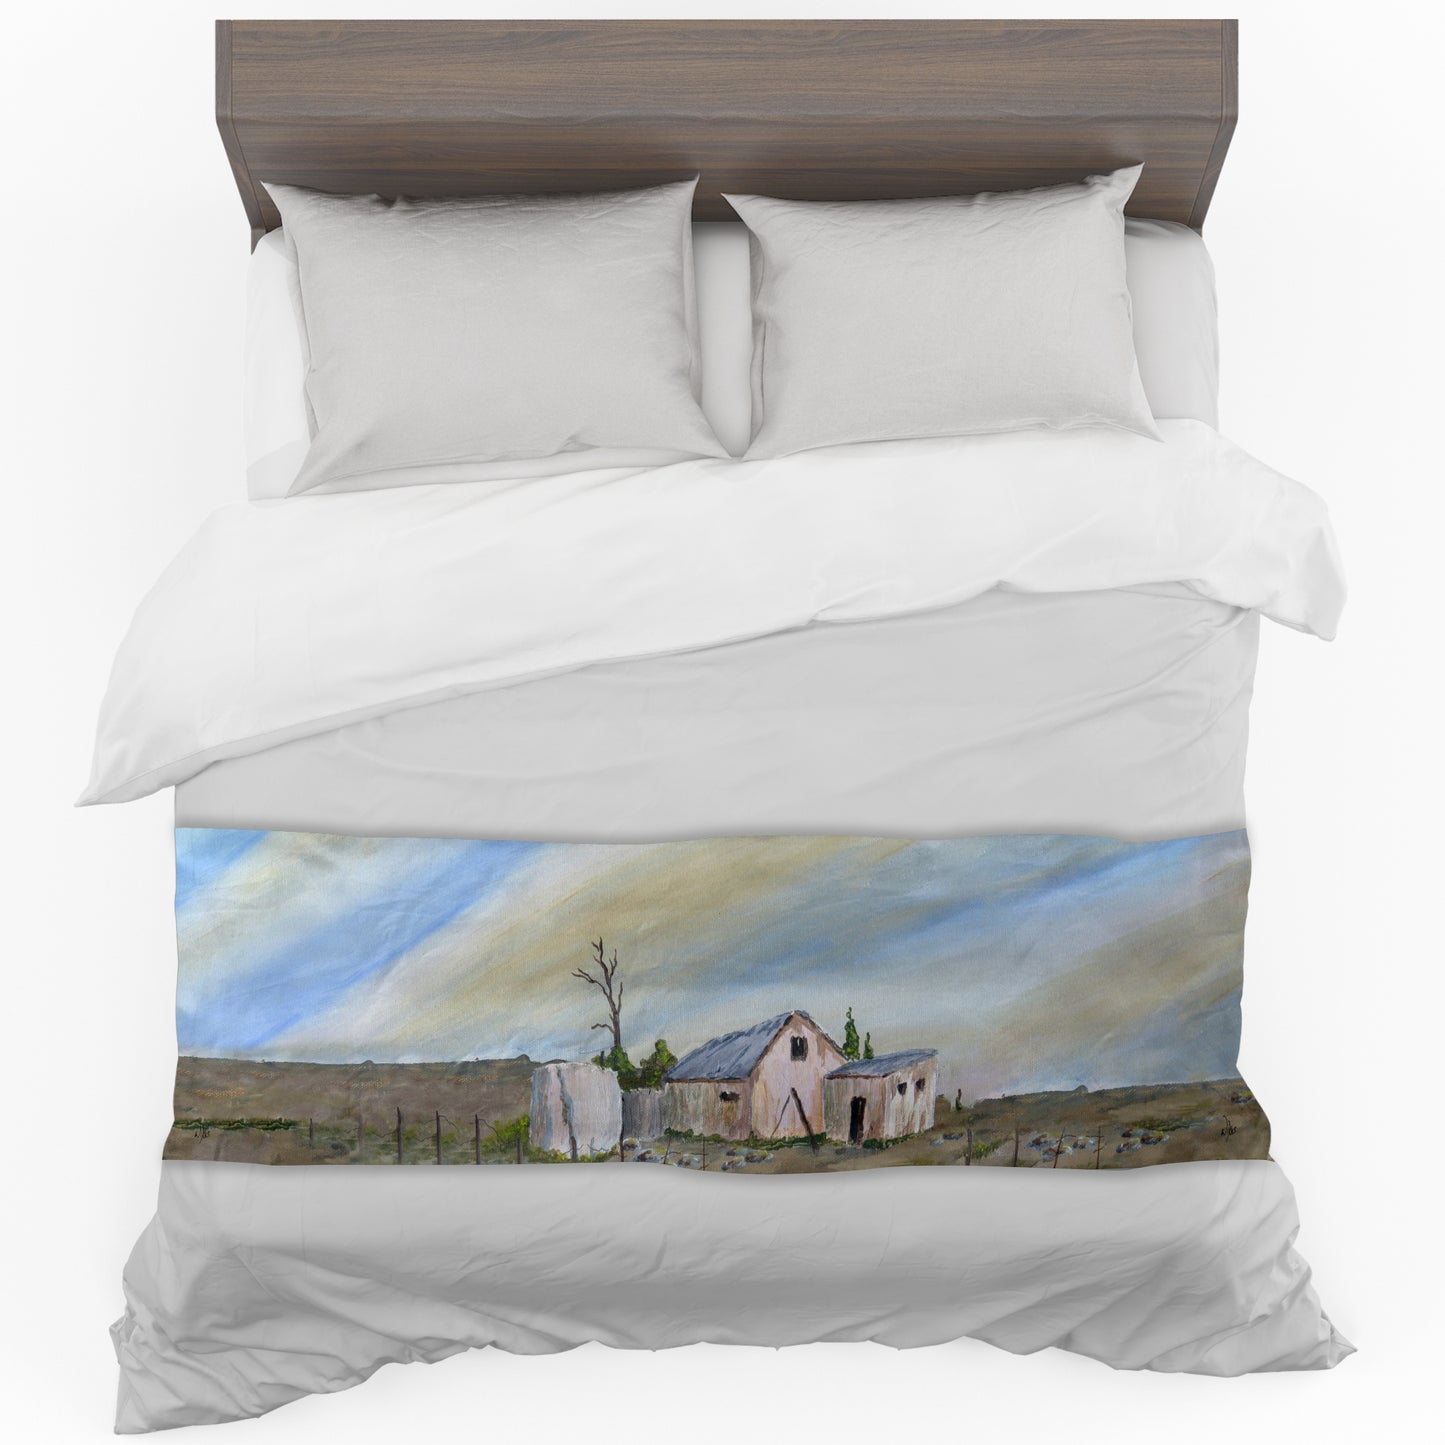 Drooge Kraal By Wikus Hattingh Bed Runner and Optional Pillowcases